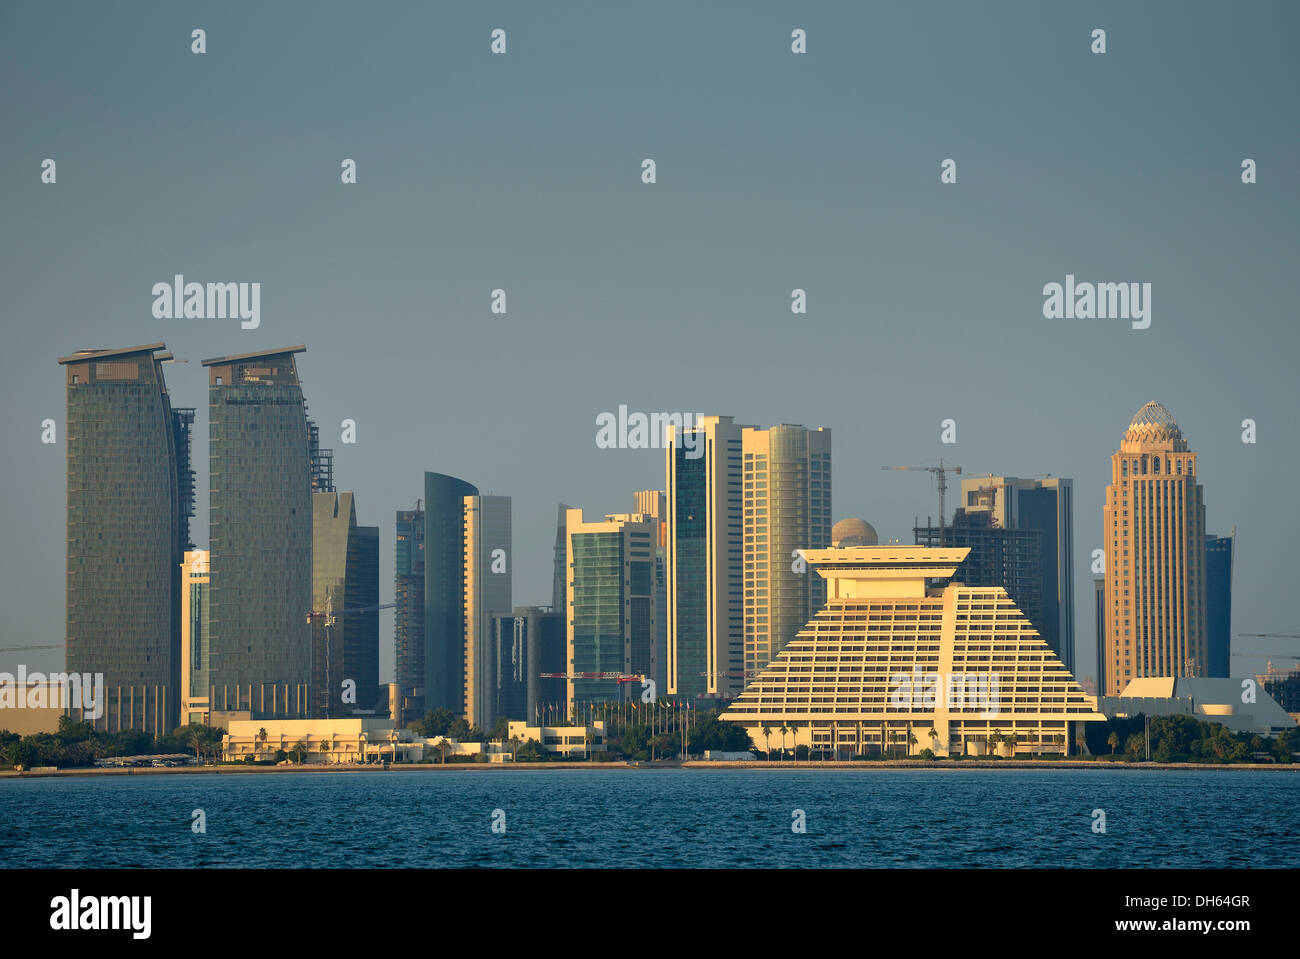 Skyline von Doha mit Al Fardan Residenzen Turm, Doha Bank Tower, Sheraton Doha Hotel Four Seasons Hotel, im Abendlicht Stockfoto